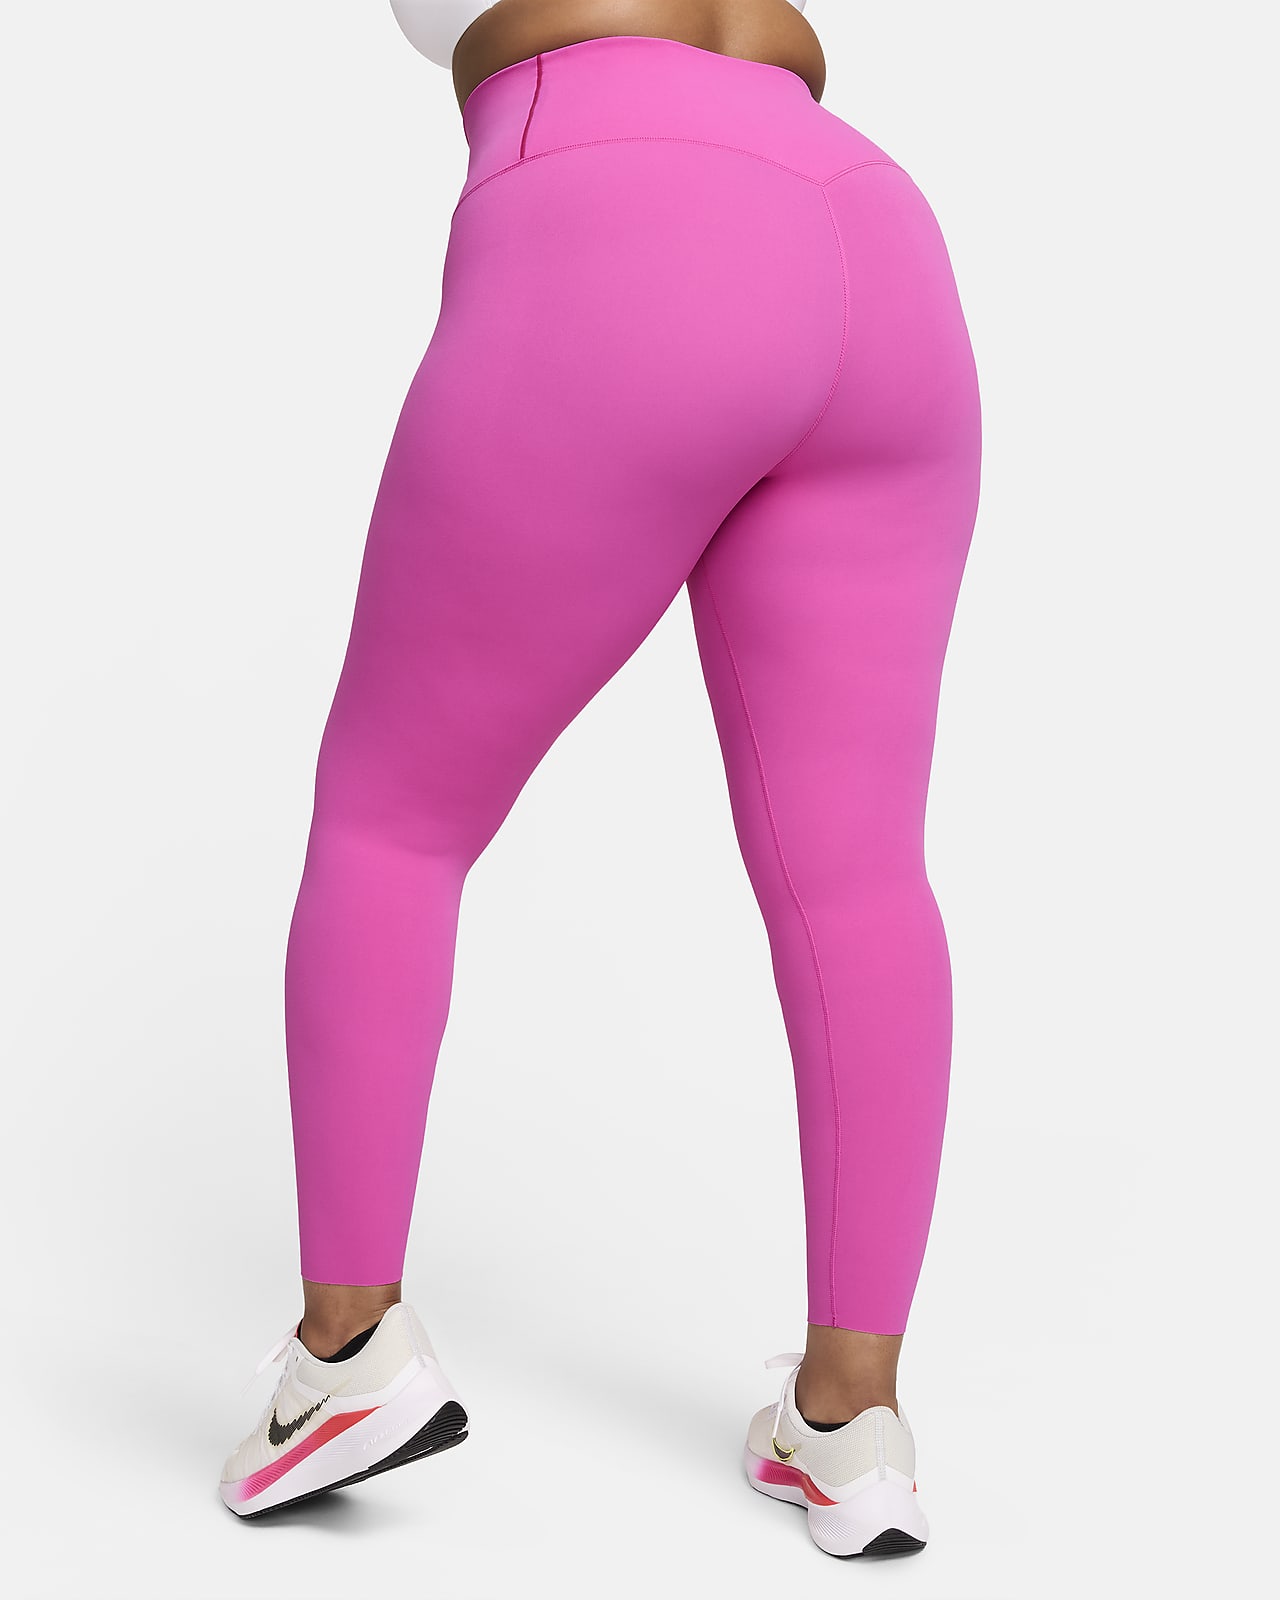 Nike Zenvy 7/8 High Waisted Tights Size L, Women's Fashion